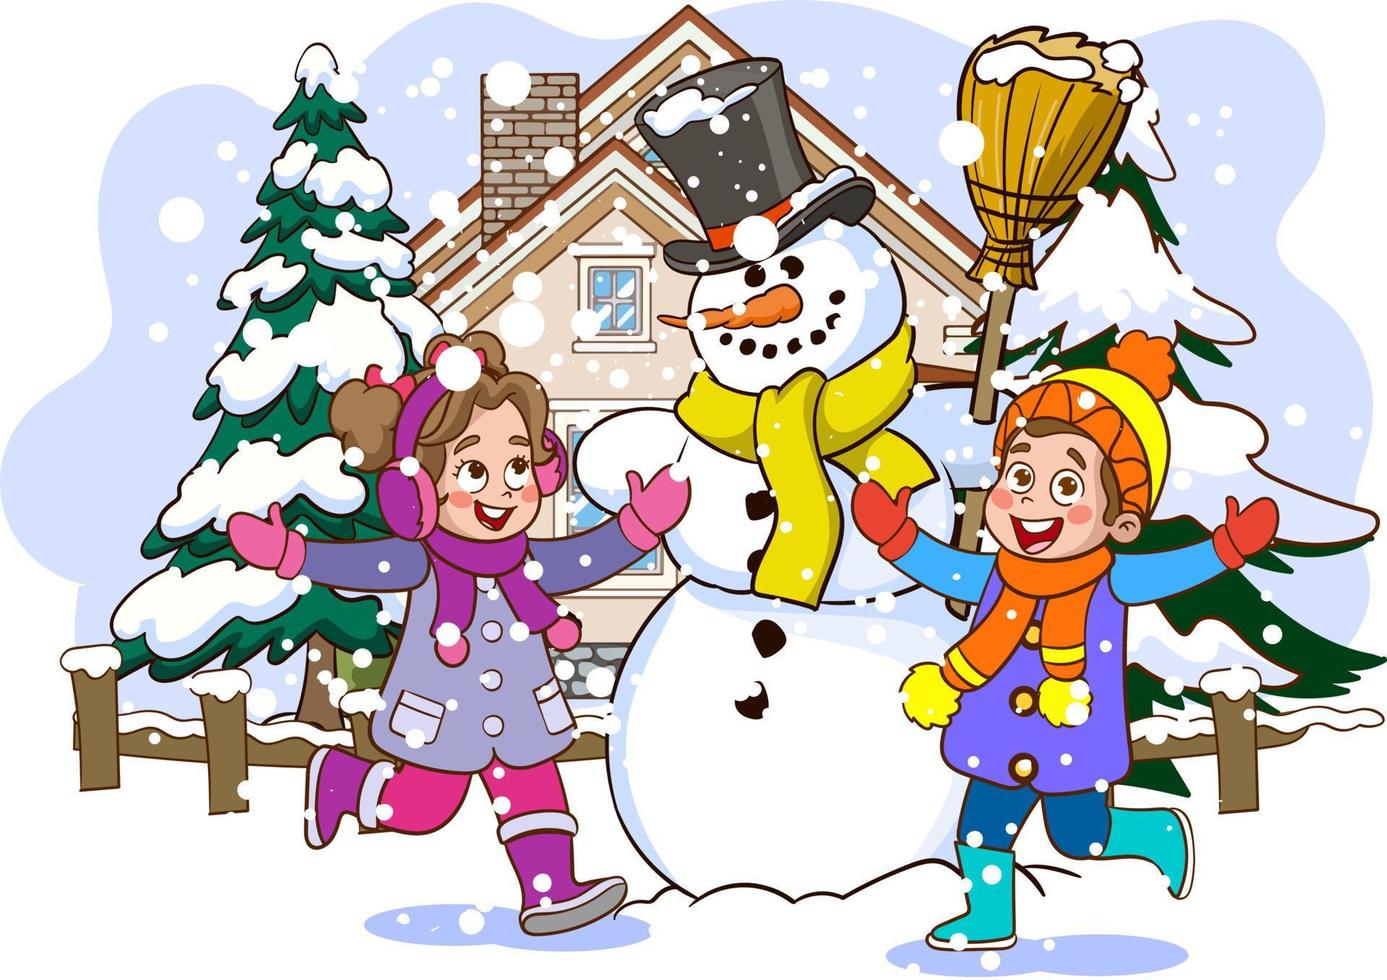 winter snowing and kids having fun making snowman vector